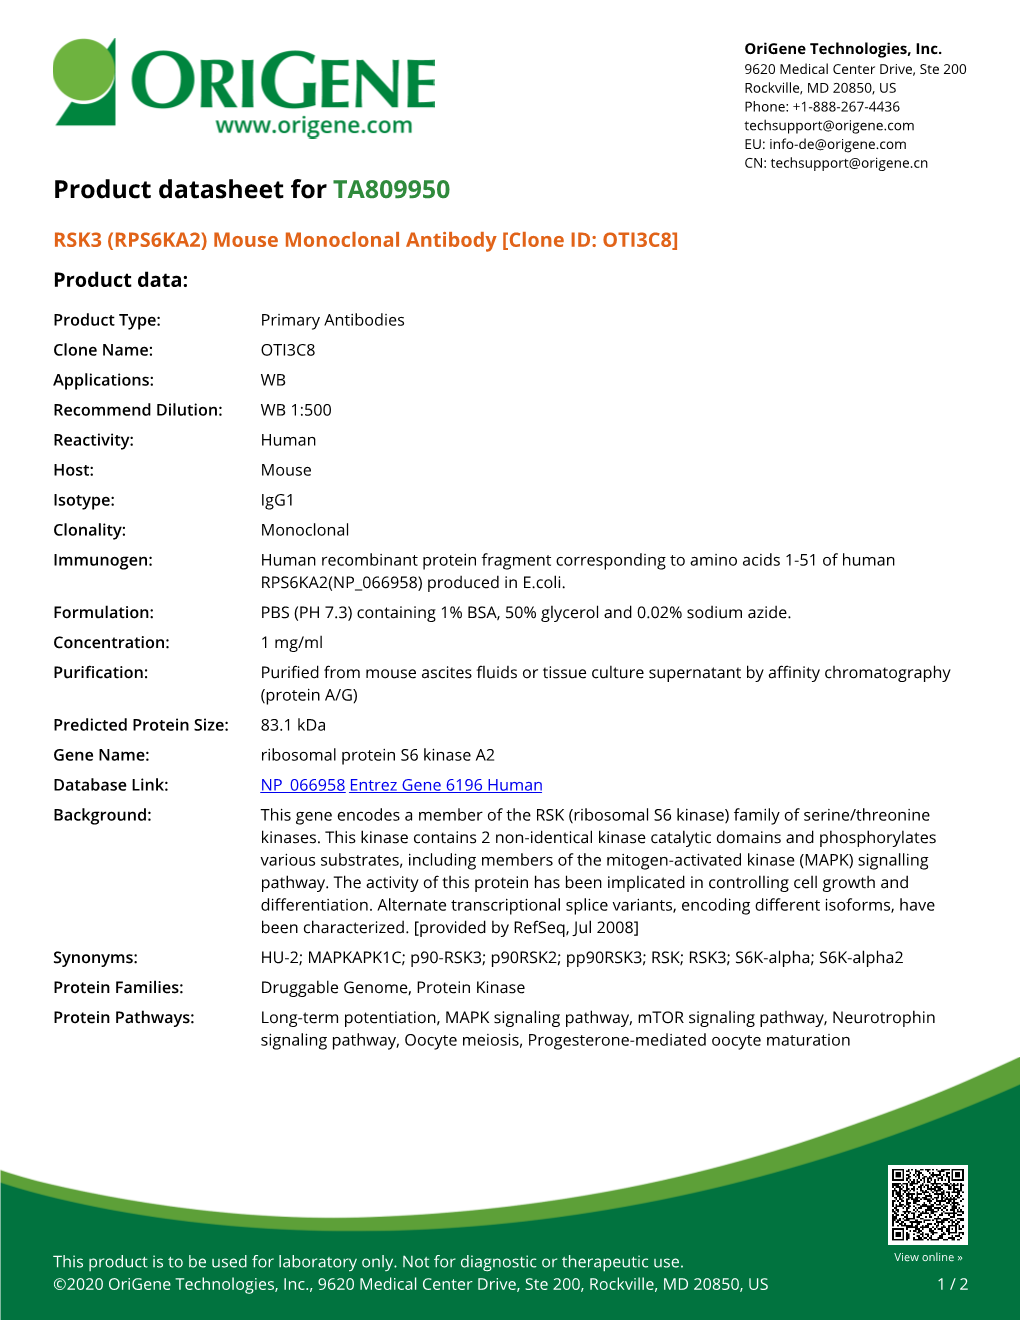 RSK3 (RPS6KA2) Mouse Monoclonal Antibody [Clone ID: OTI3C8] Product Data